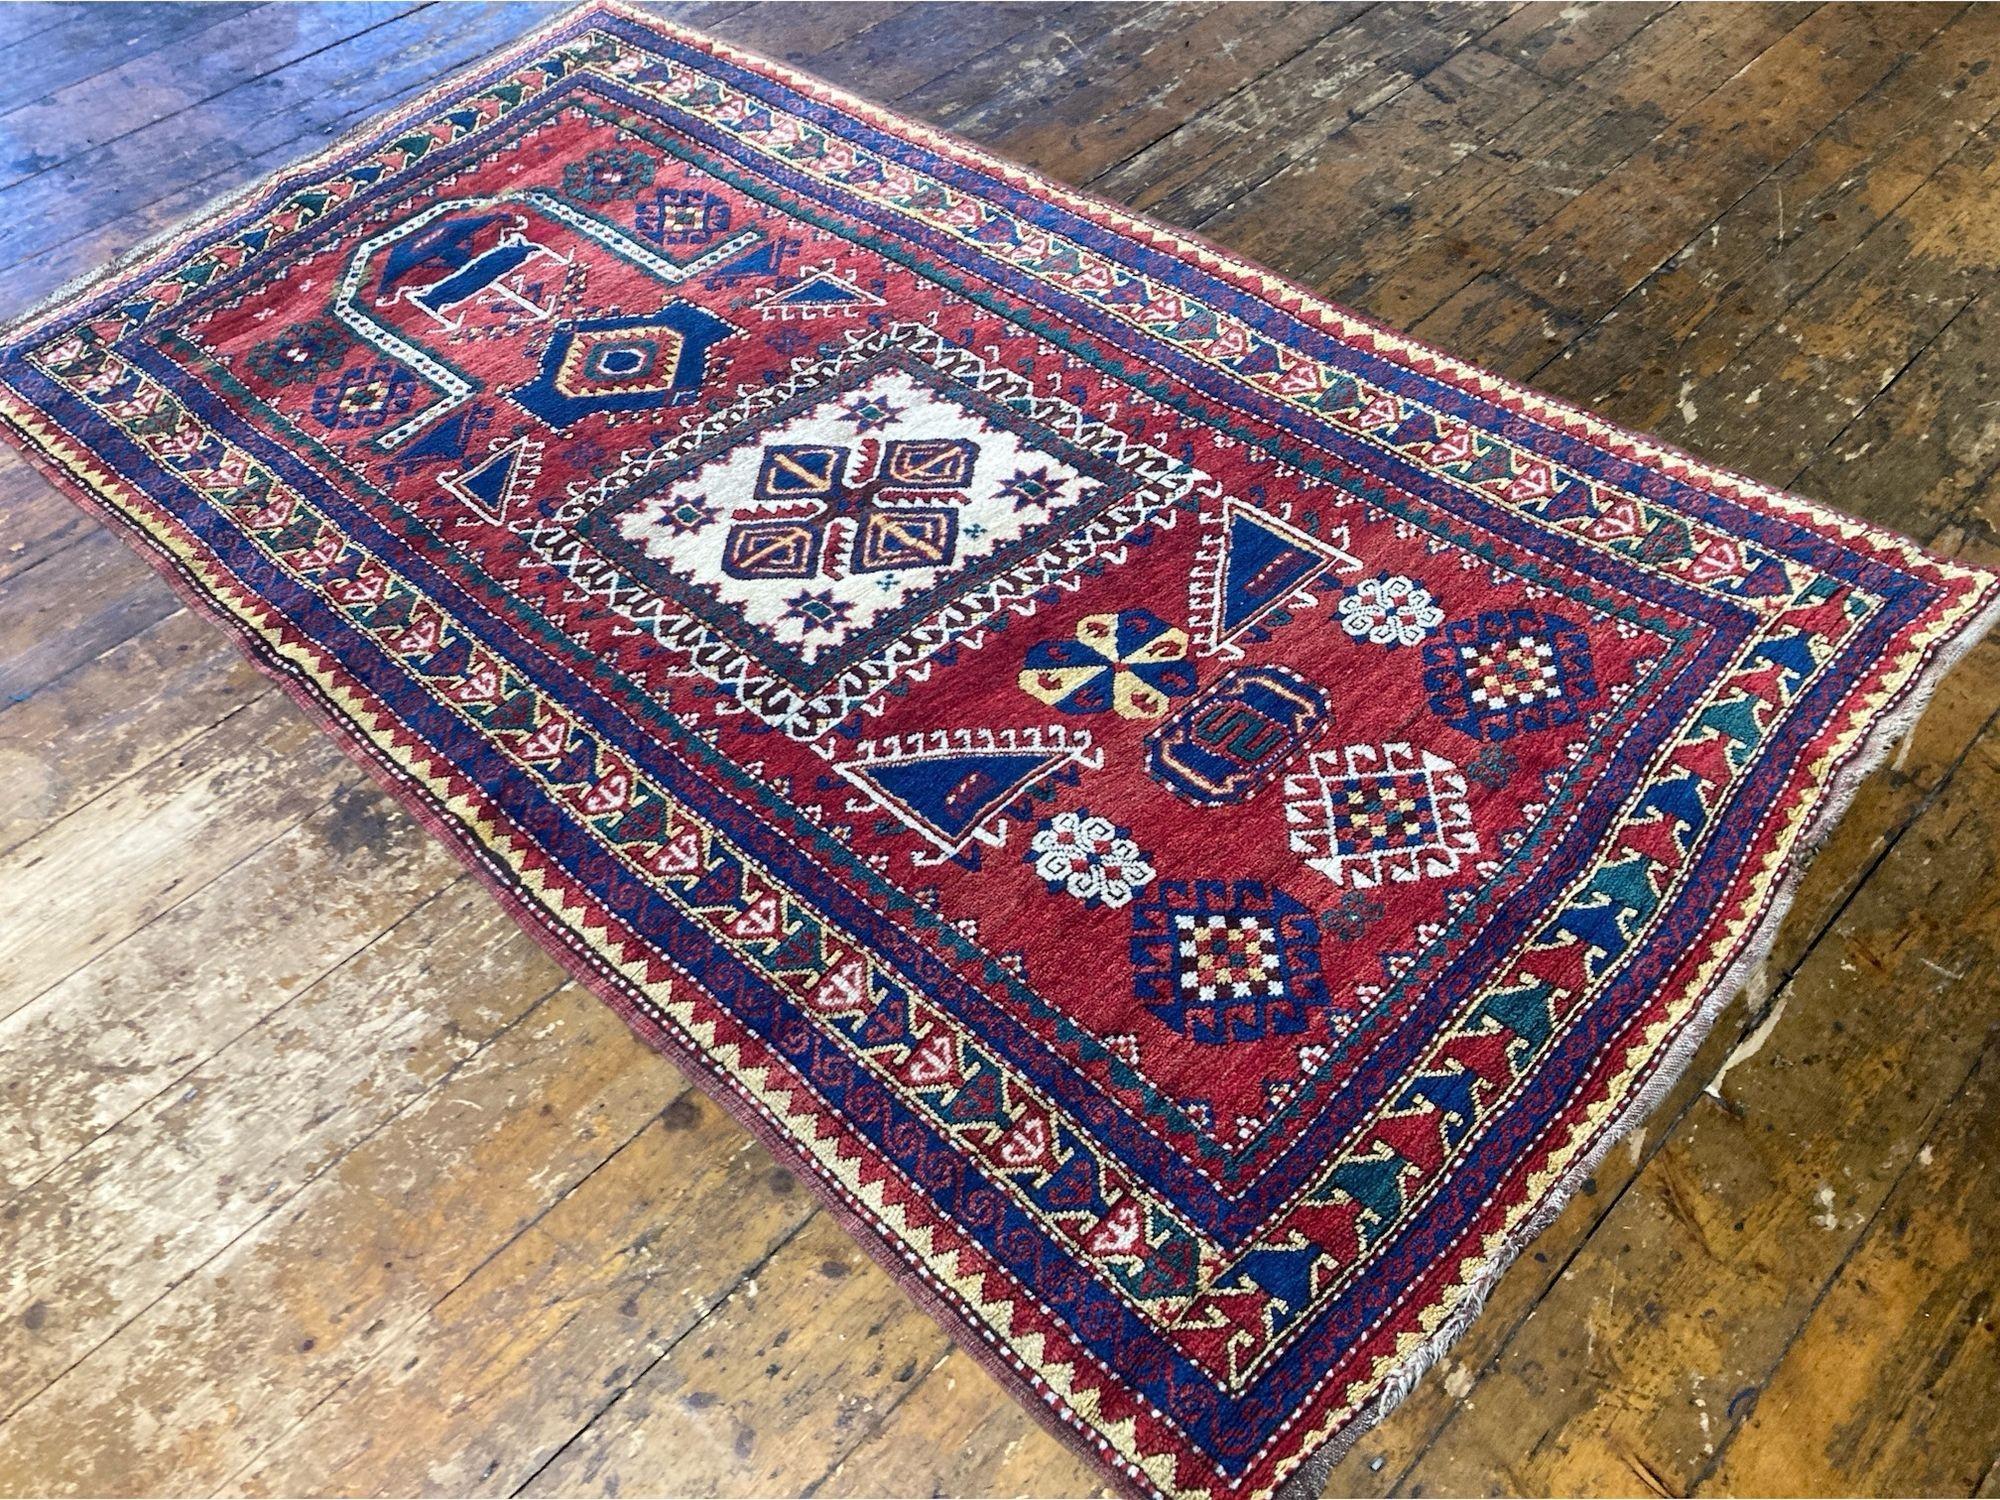 Wool Antique Caucasian Fachralo Kazak Prayer Rug 2.48m x 1.30m For Sale